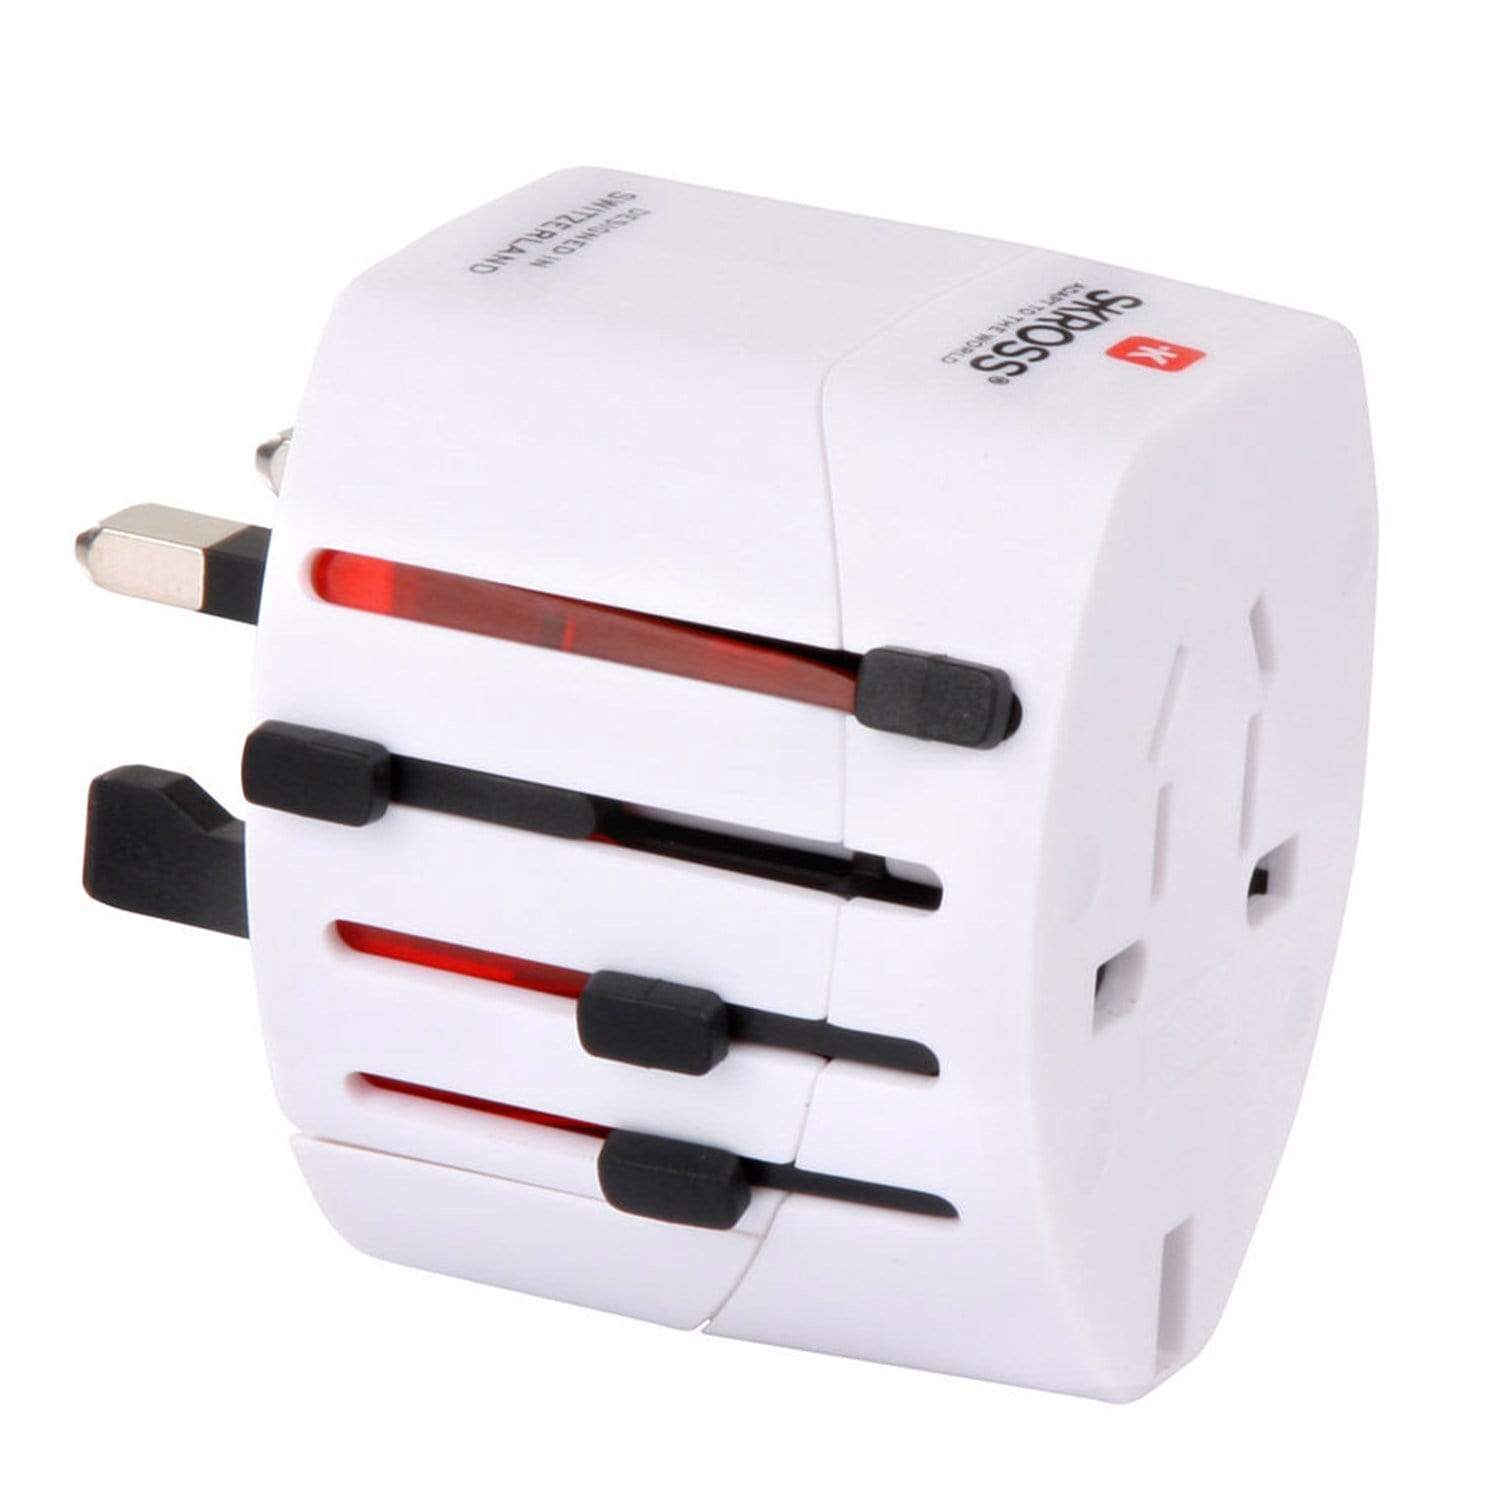 Skross Evo Multi Plug World Adapter without USB - White - 1102100 - Jashanmal Home